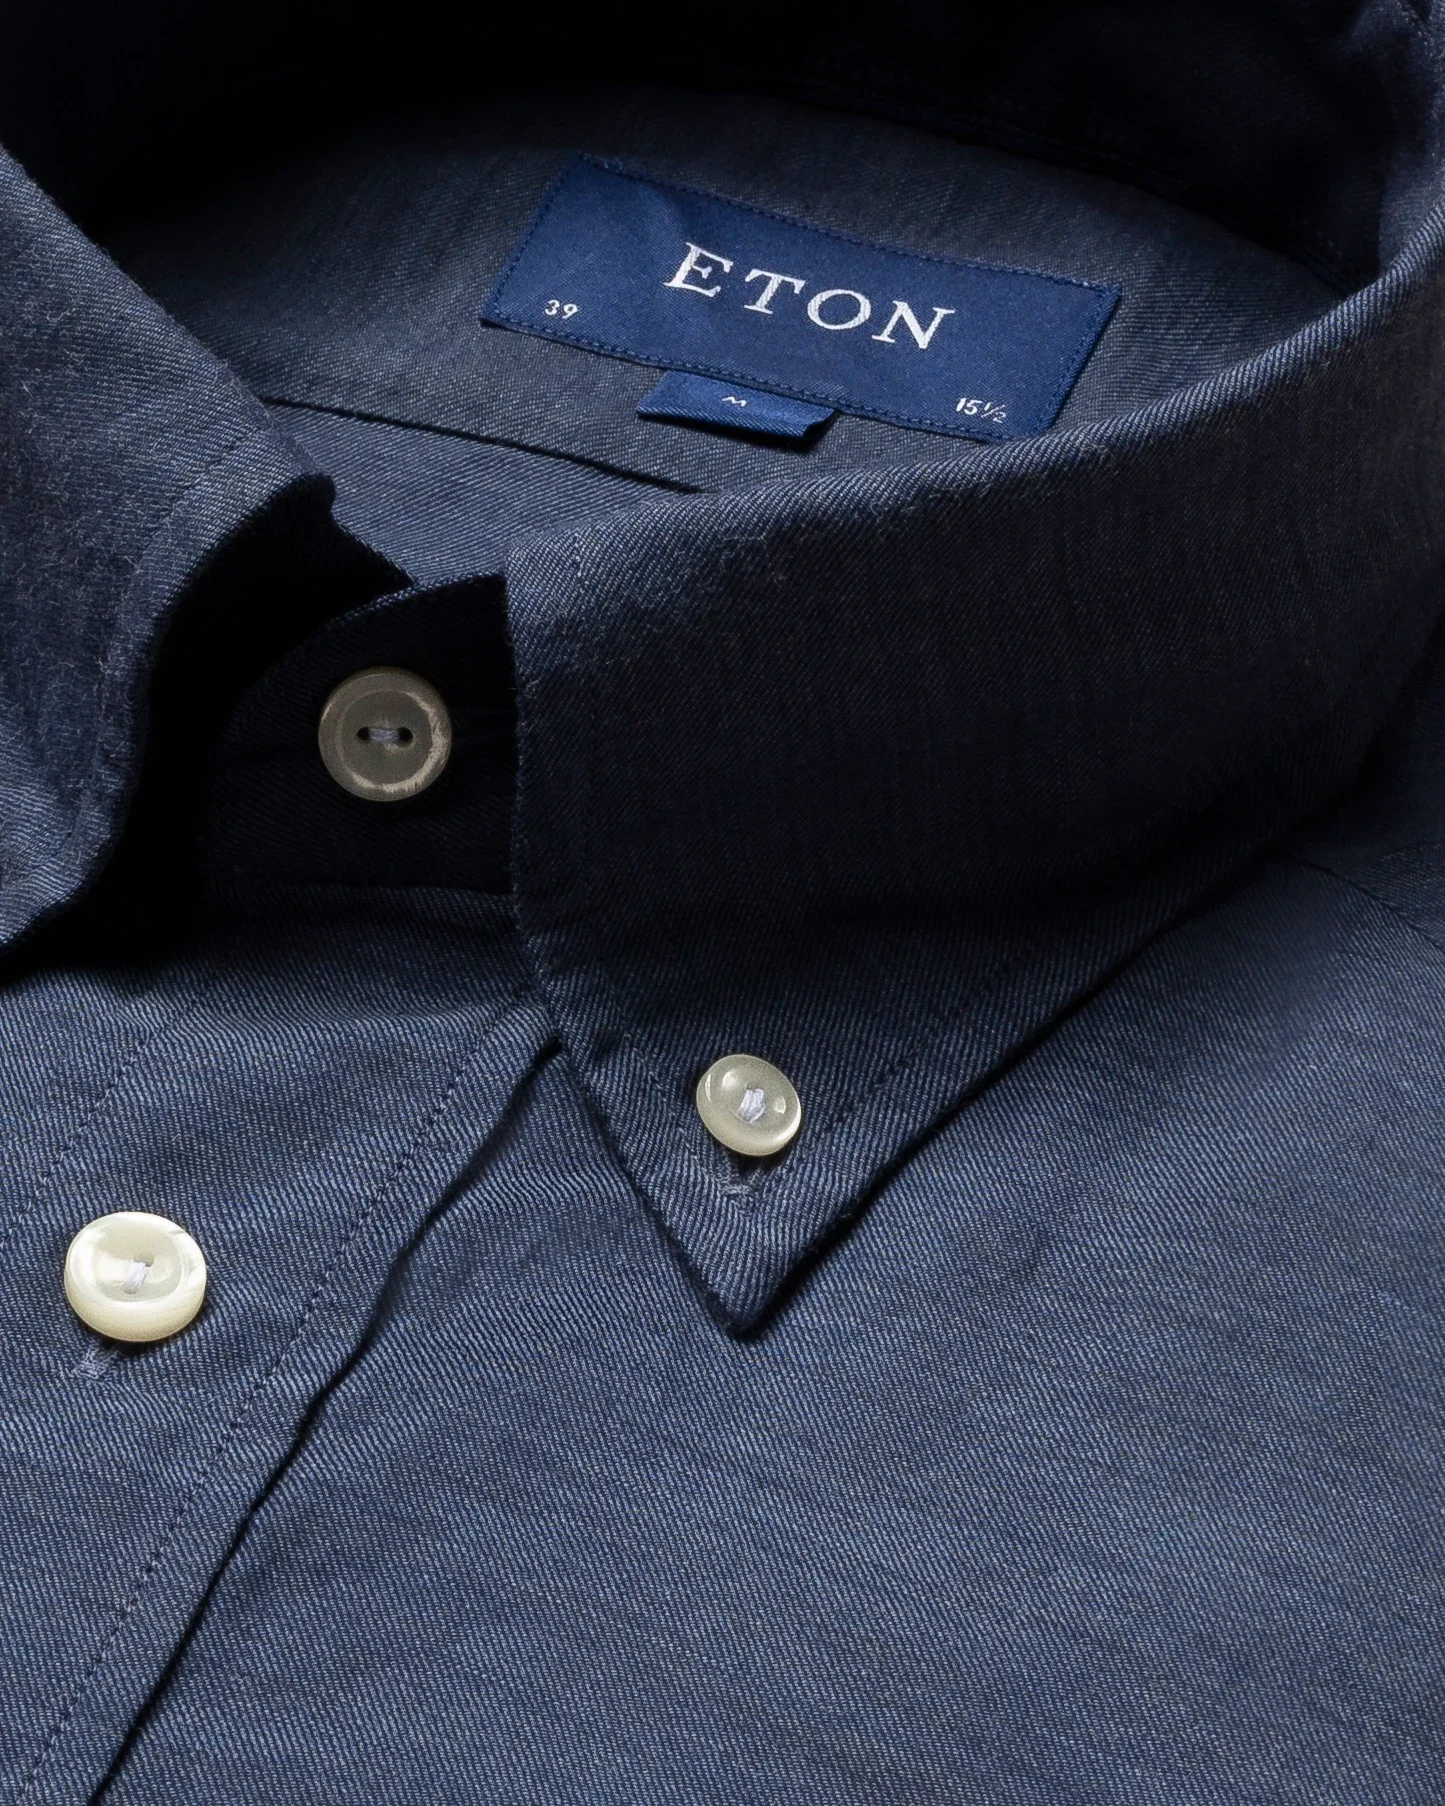 Eton - navy flannel shirt